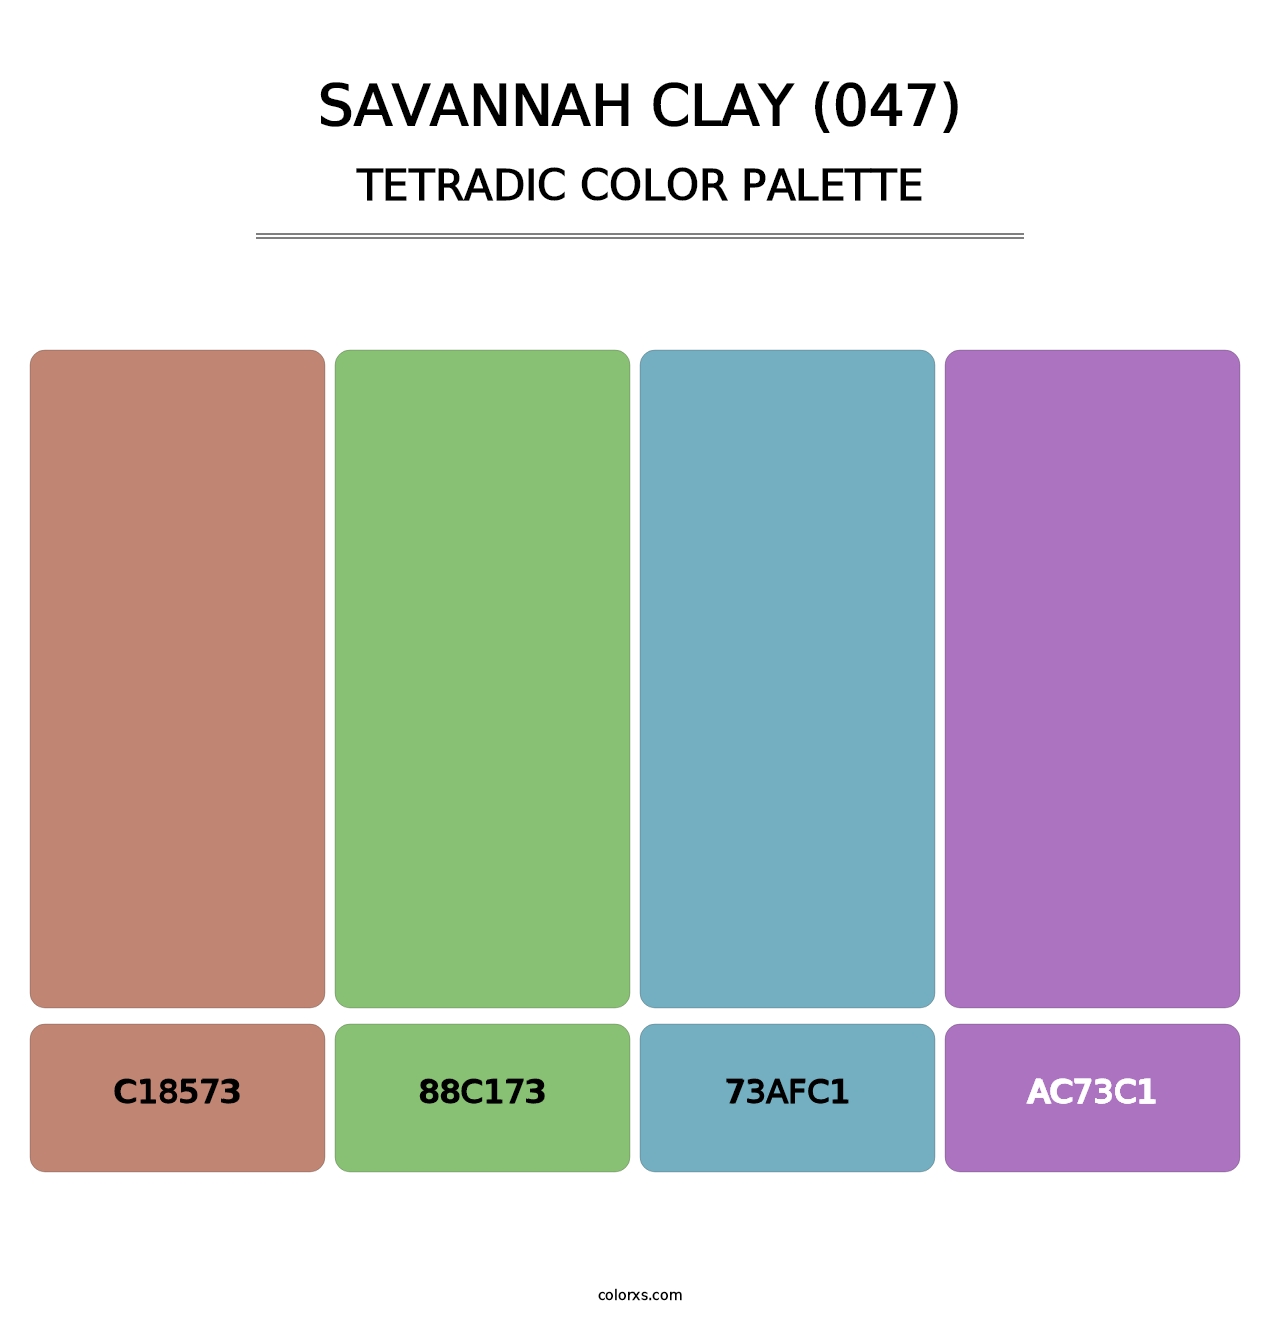 Savannah Clay (047) - Tetradic Color Palette